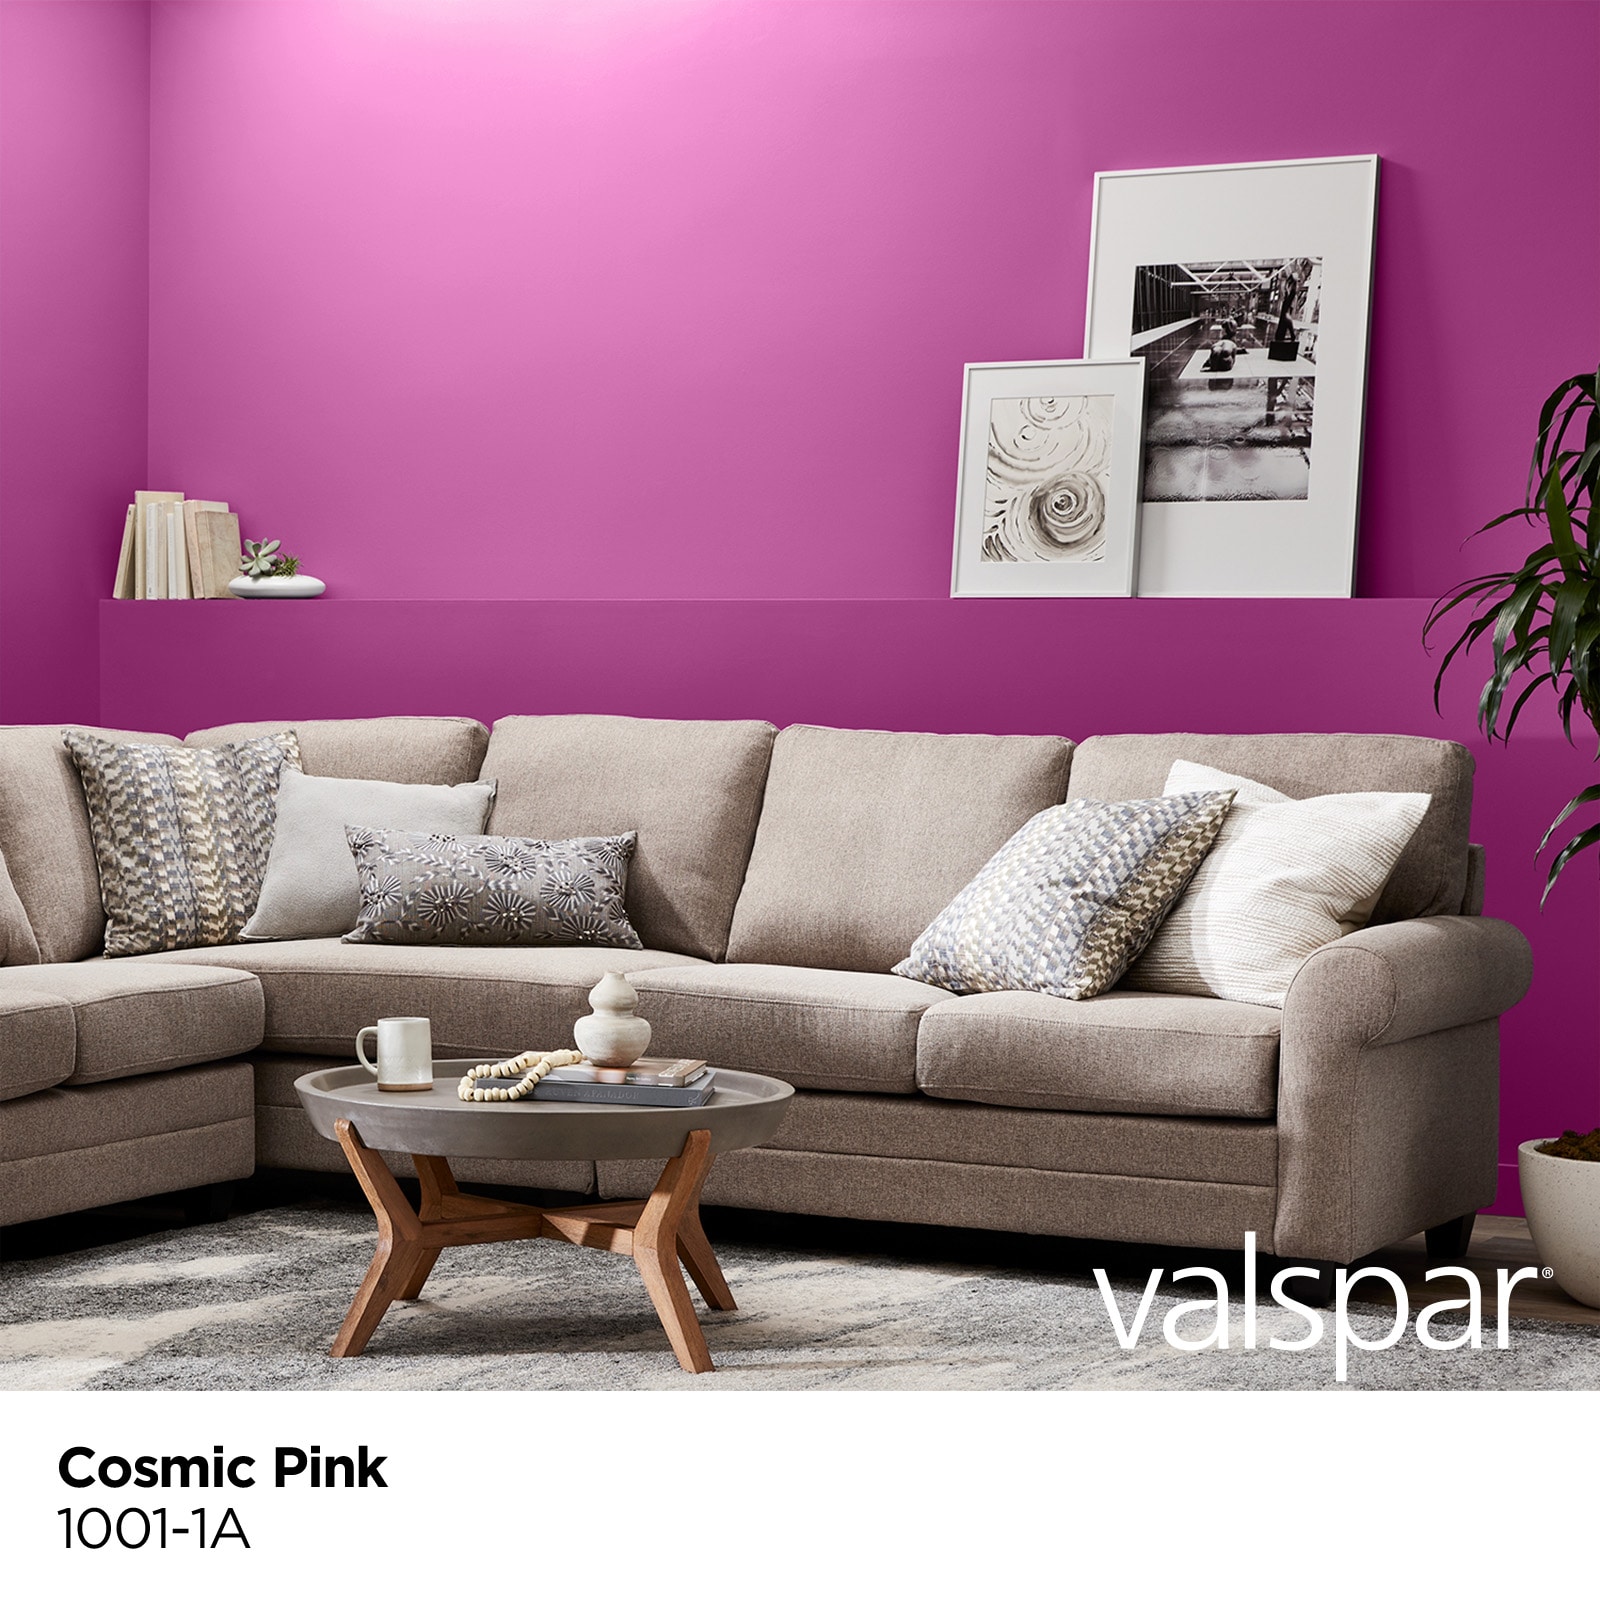 Valspar Signature Semi-gloss Cosmic Pink 1001-1a Latex Interior